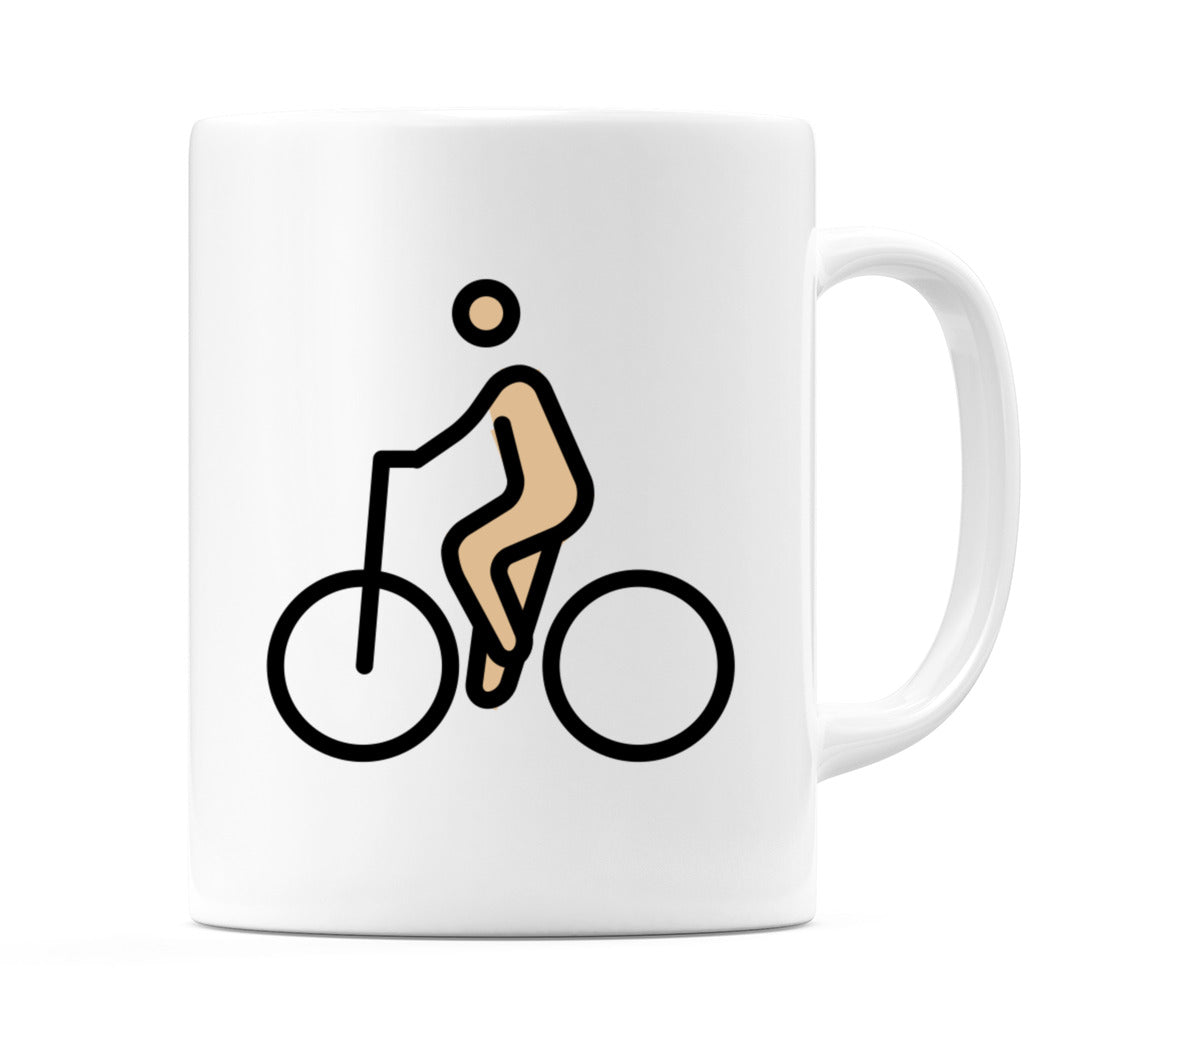 Person Biking: Medium-Light Skin Tone Emoji Mug